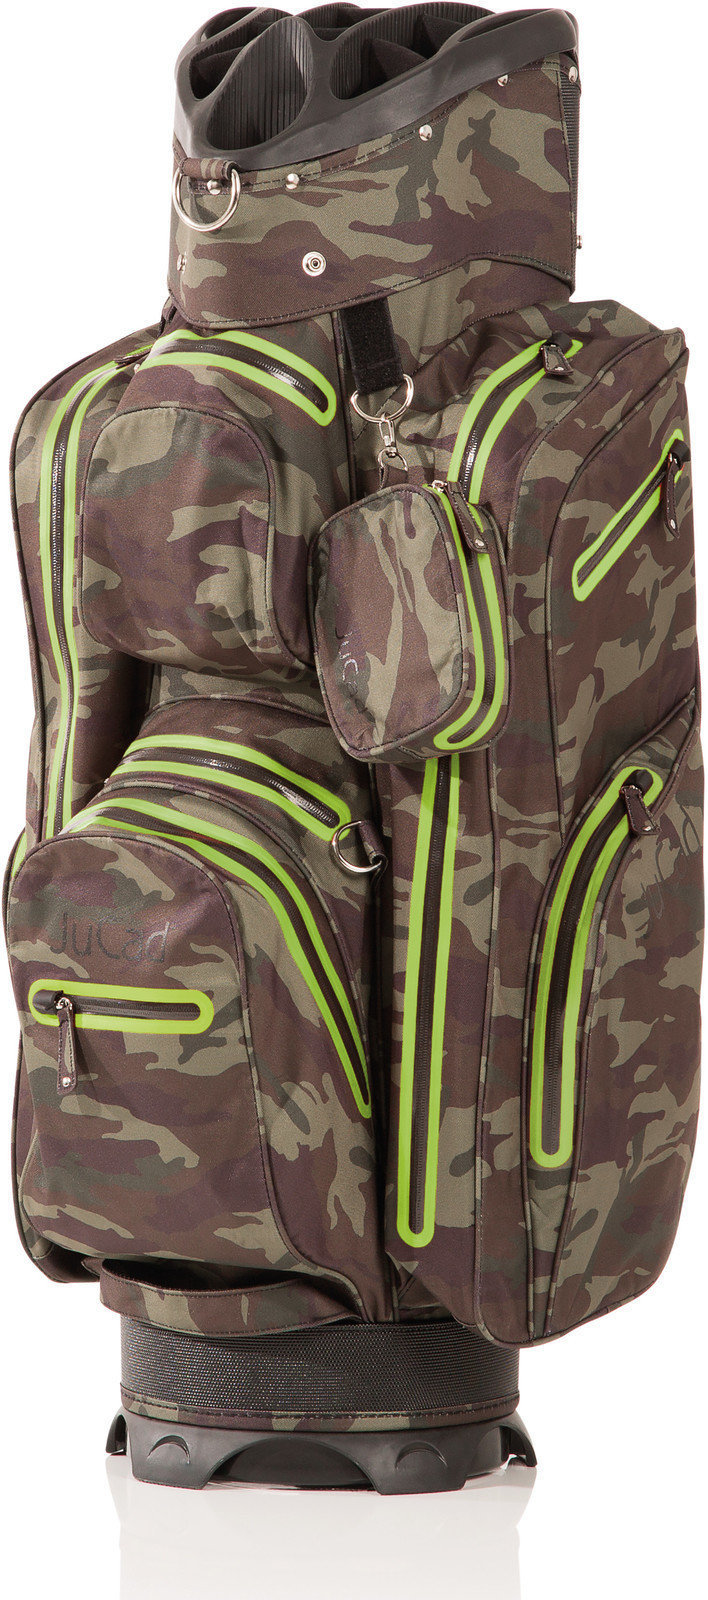 Cart Bag Jucad Aquastop Camouflage/Green Cart Bag